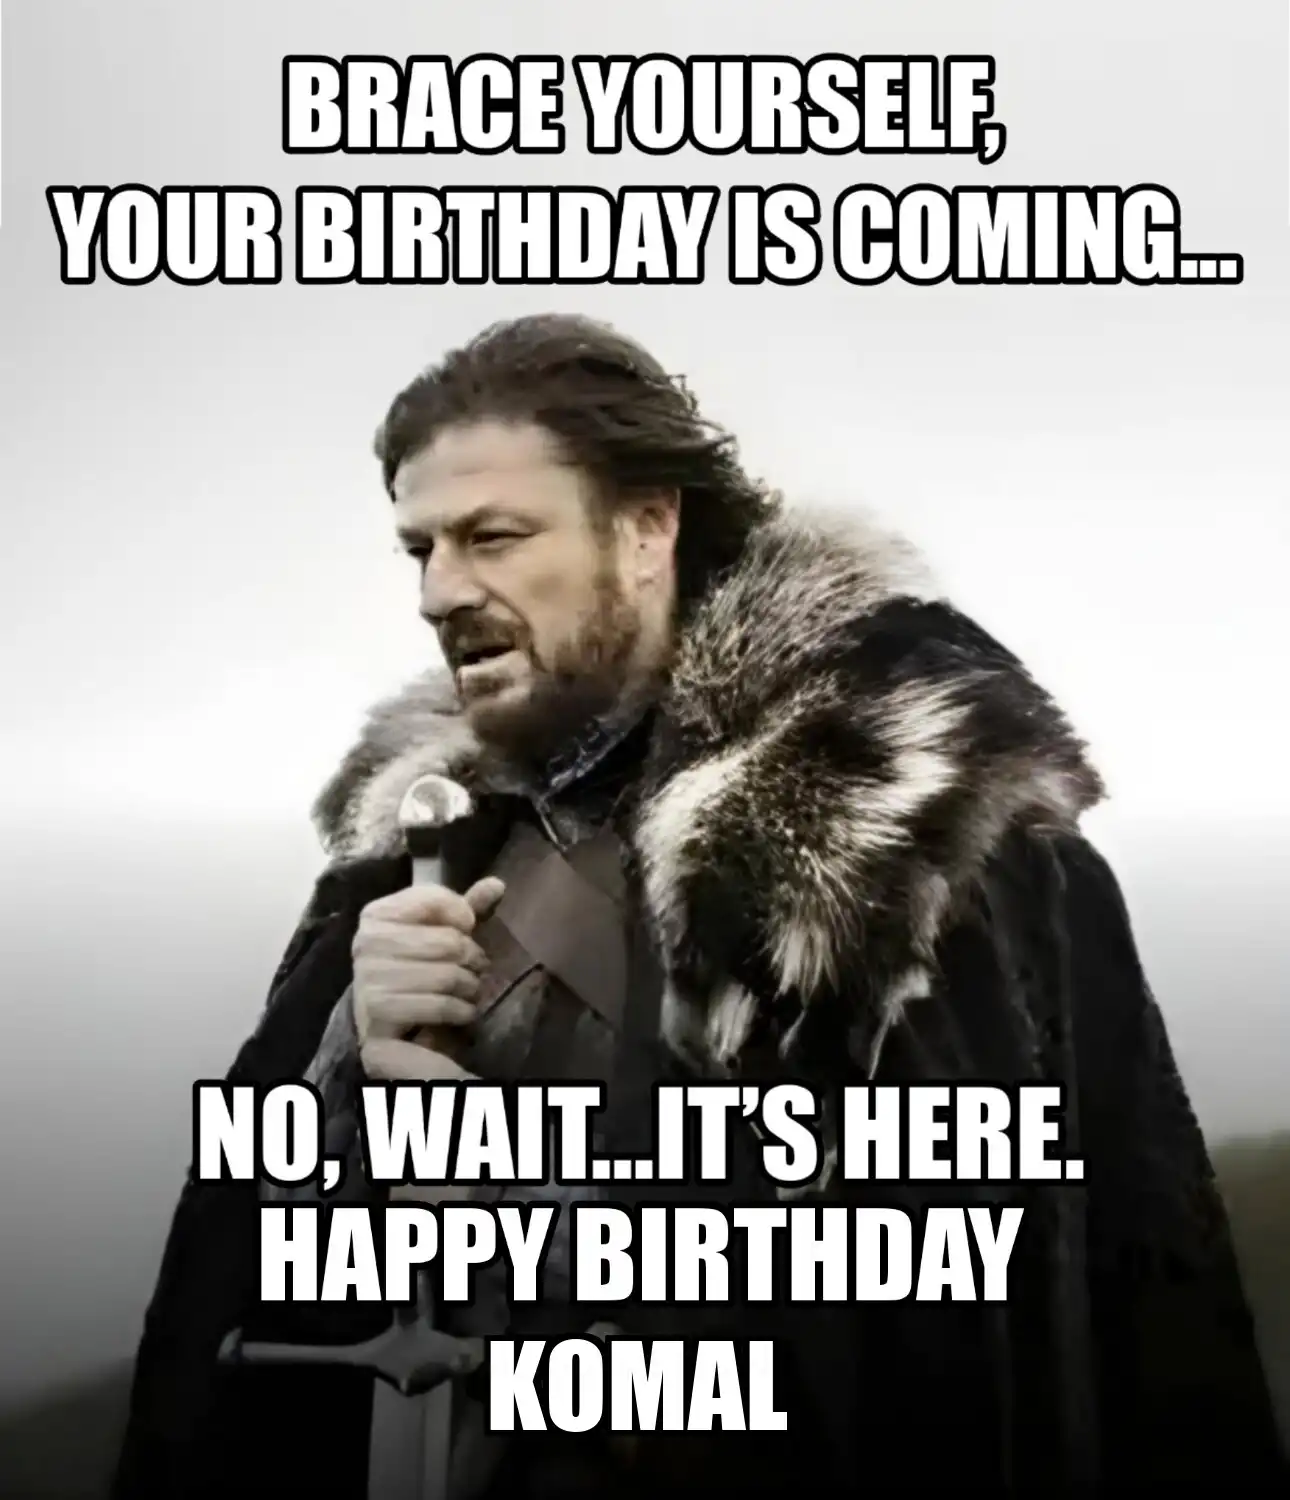 Happy Birthday Komal Brace Yourself Your Birthday Is Coming Meme